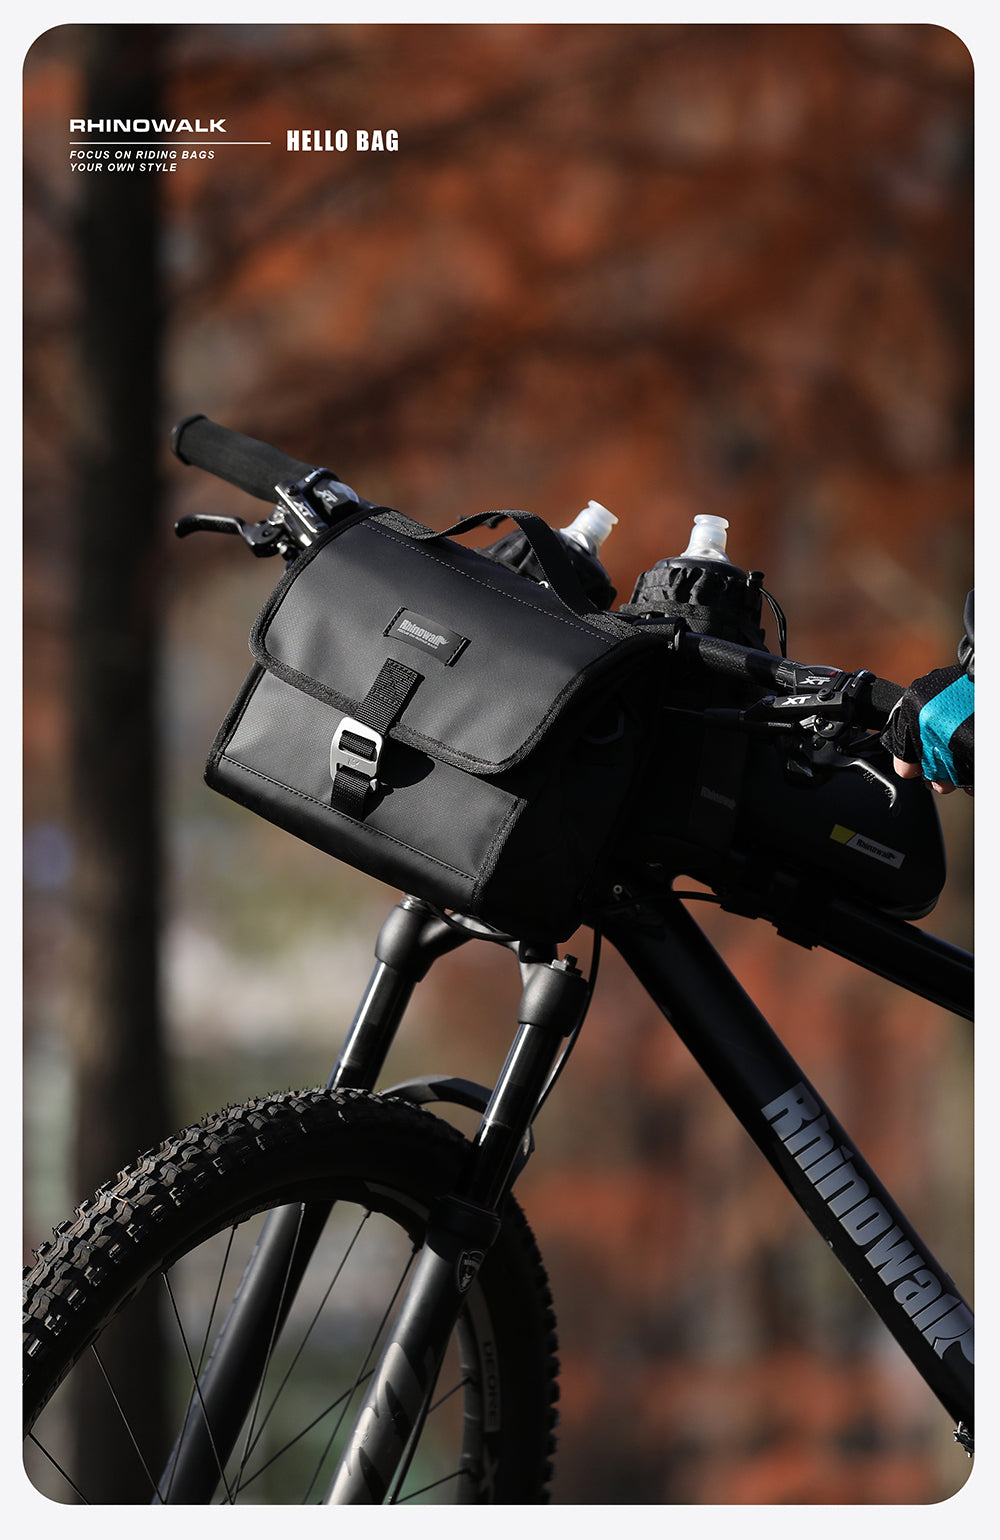 Amazon.com: PACK2RIDE Perfecda Bike Handlebar Bag - Water Resistant,  Durable Cordura Fabric & Bike Bag for Daily Trips - Front Biking Storage,  Bar Bag for Road, Gravel Riding (Coyote Brown) : Sports